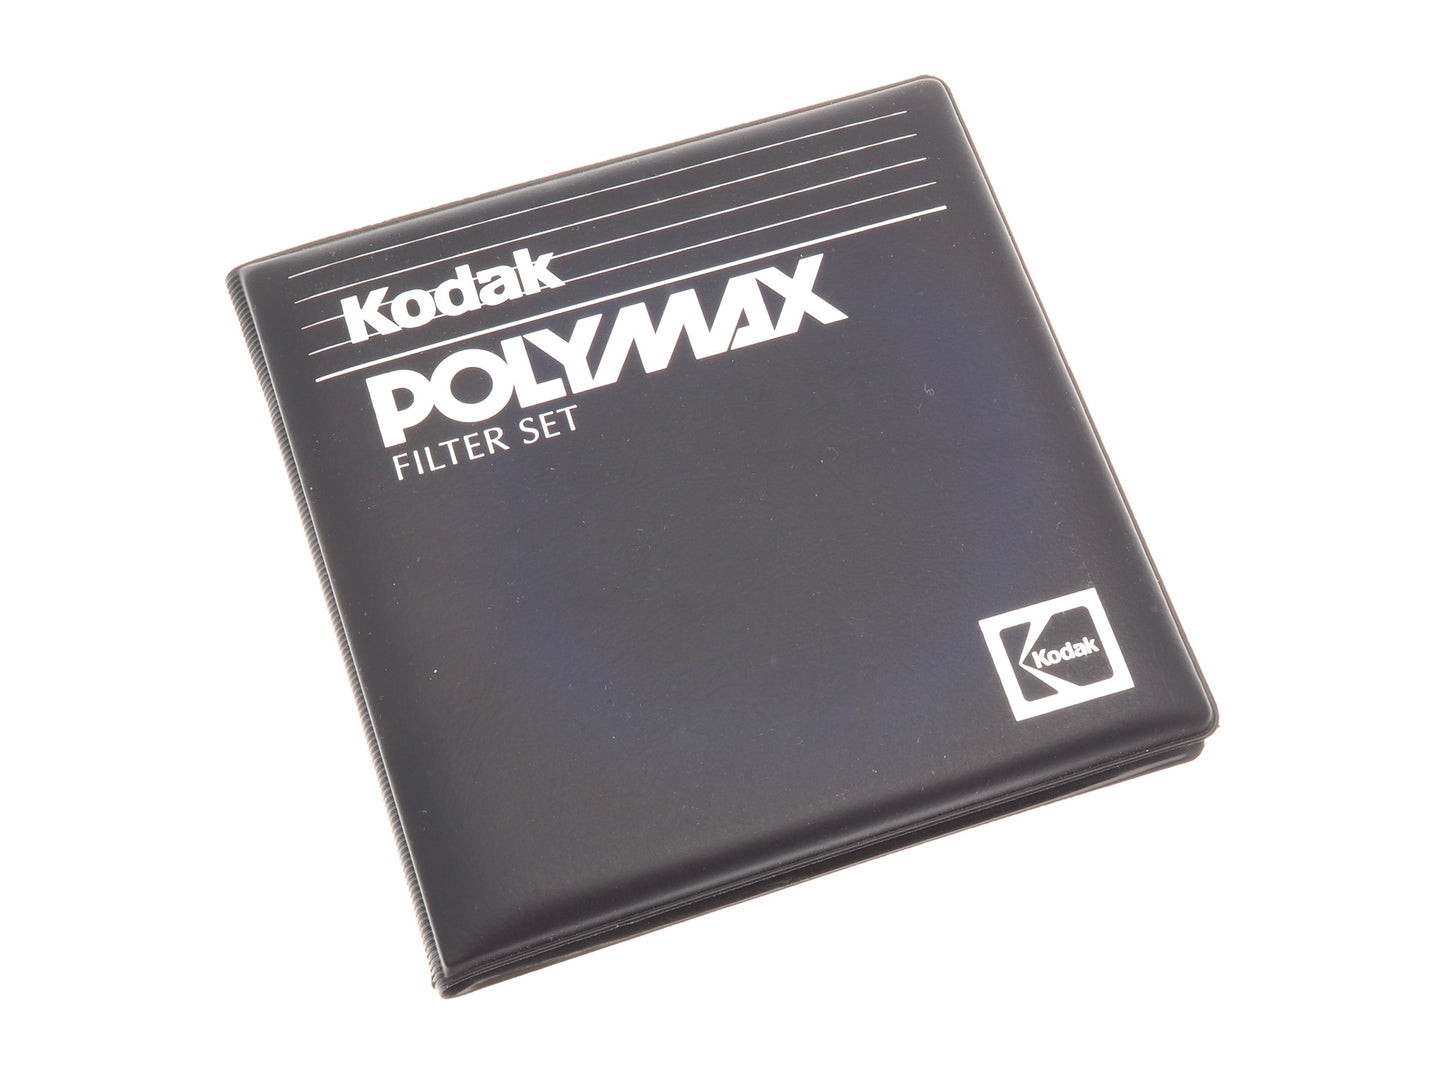 Kodak Polymax Filter Set - Accessory